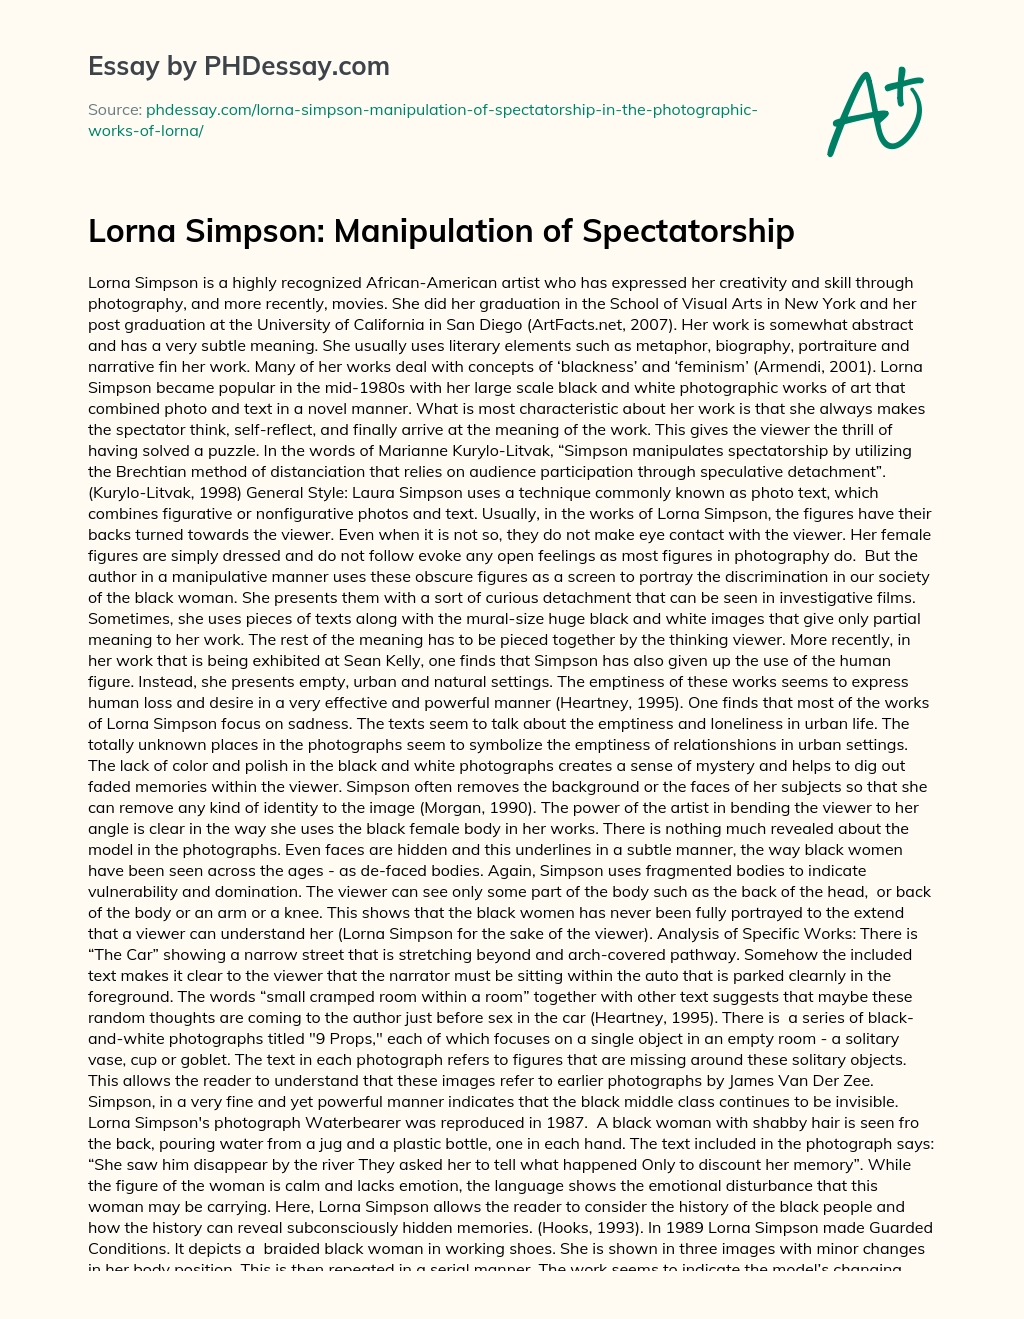 Lorna Simpson: Manipulation of Spectatorship essay